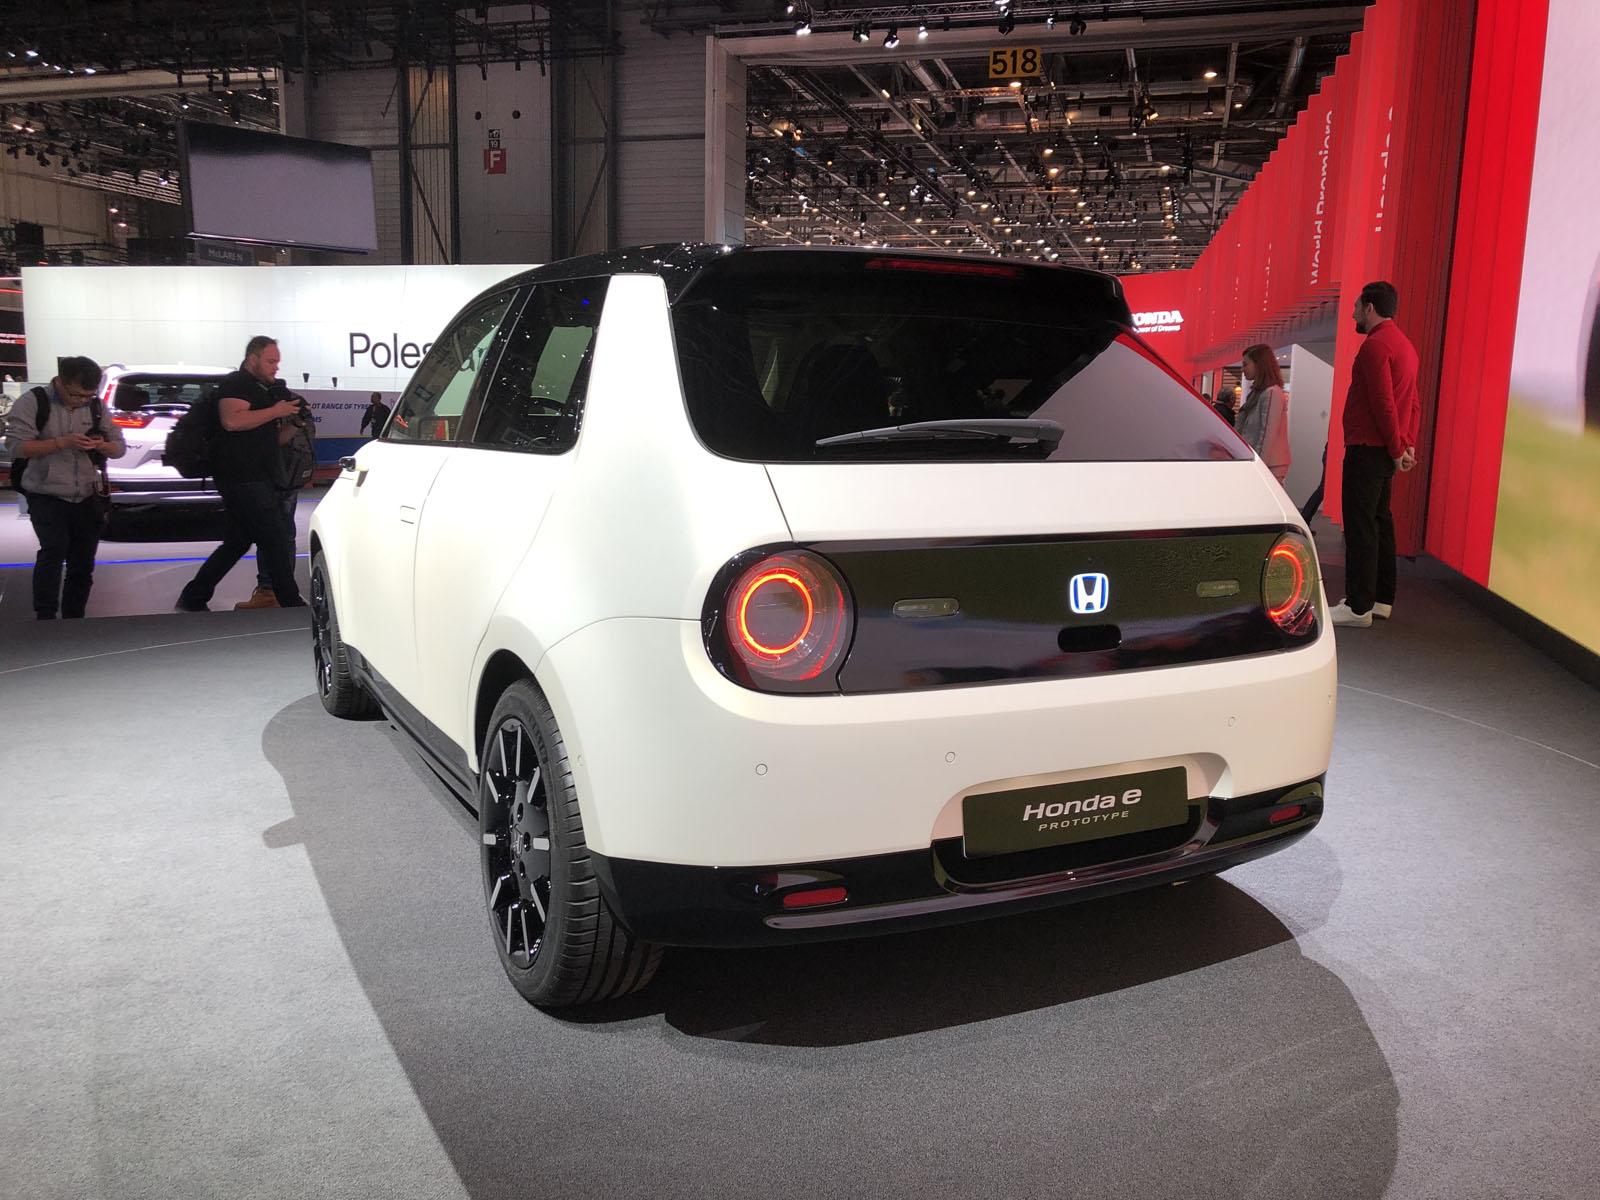 Honda e Prototype Picture And Info From The Geneva Auto Show